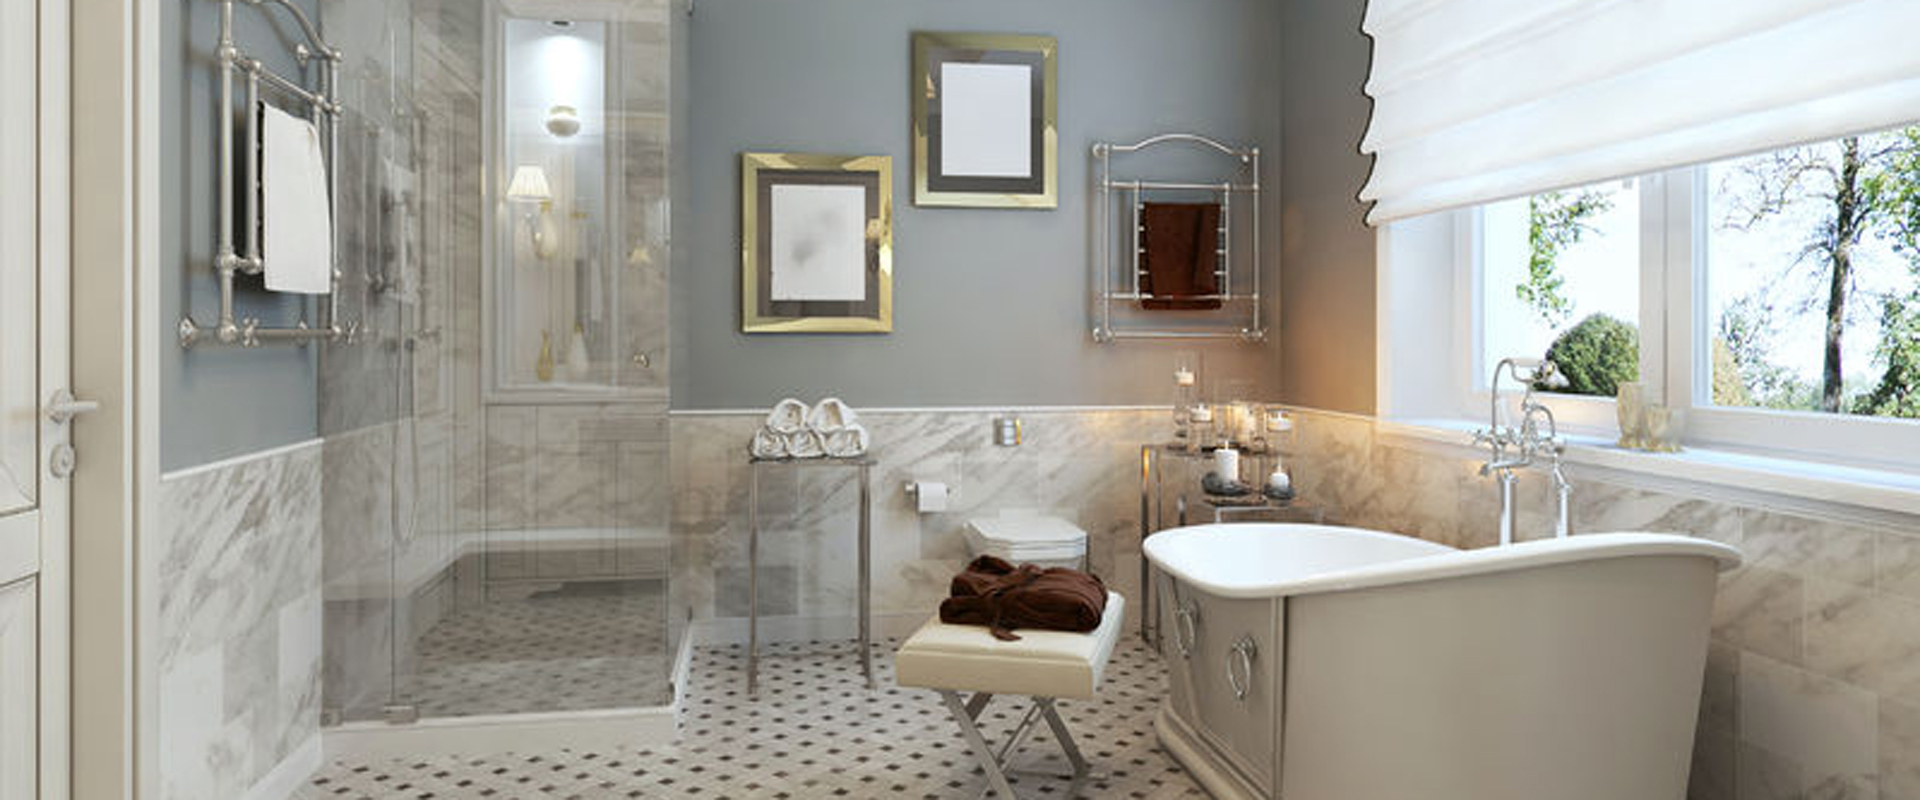 47275990 - bright bathroom provence. 3d render